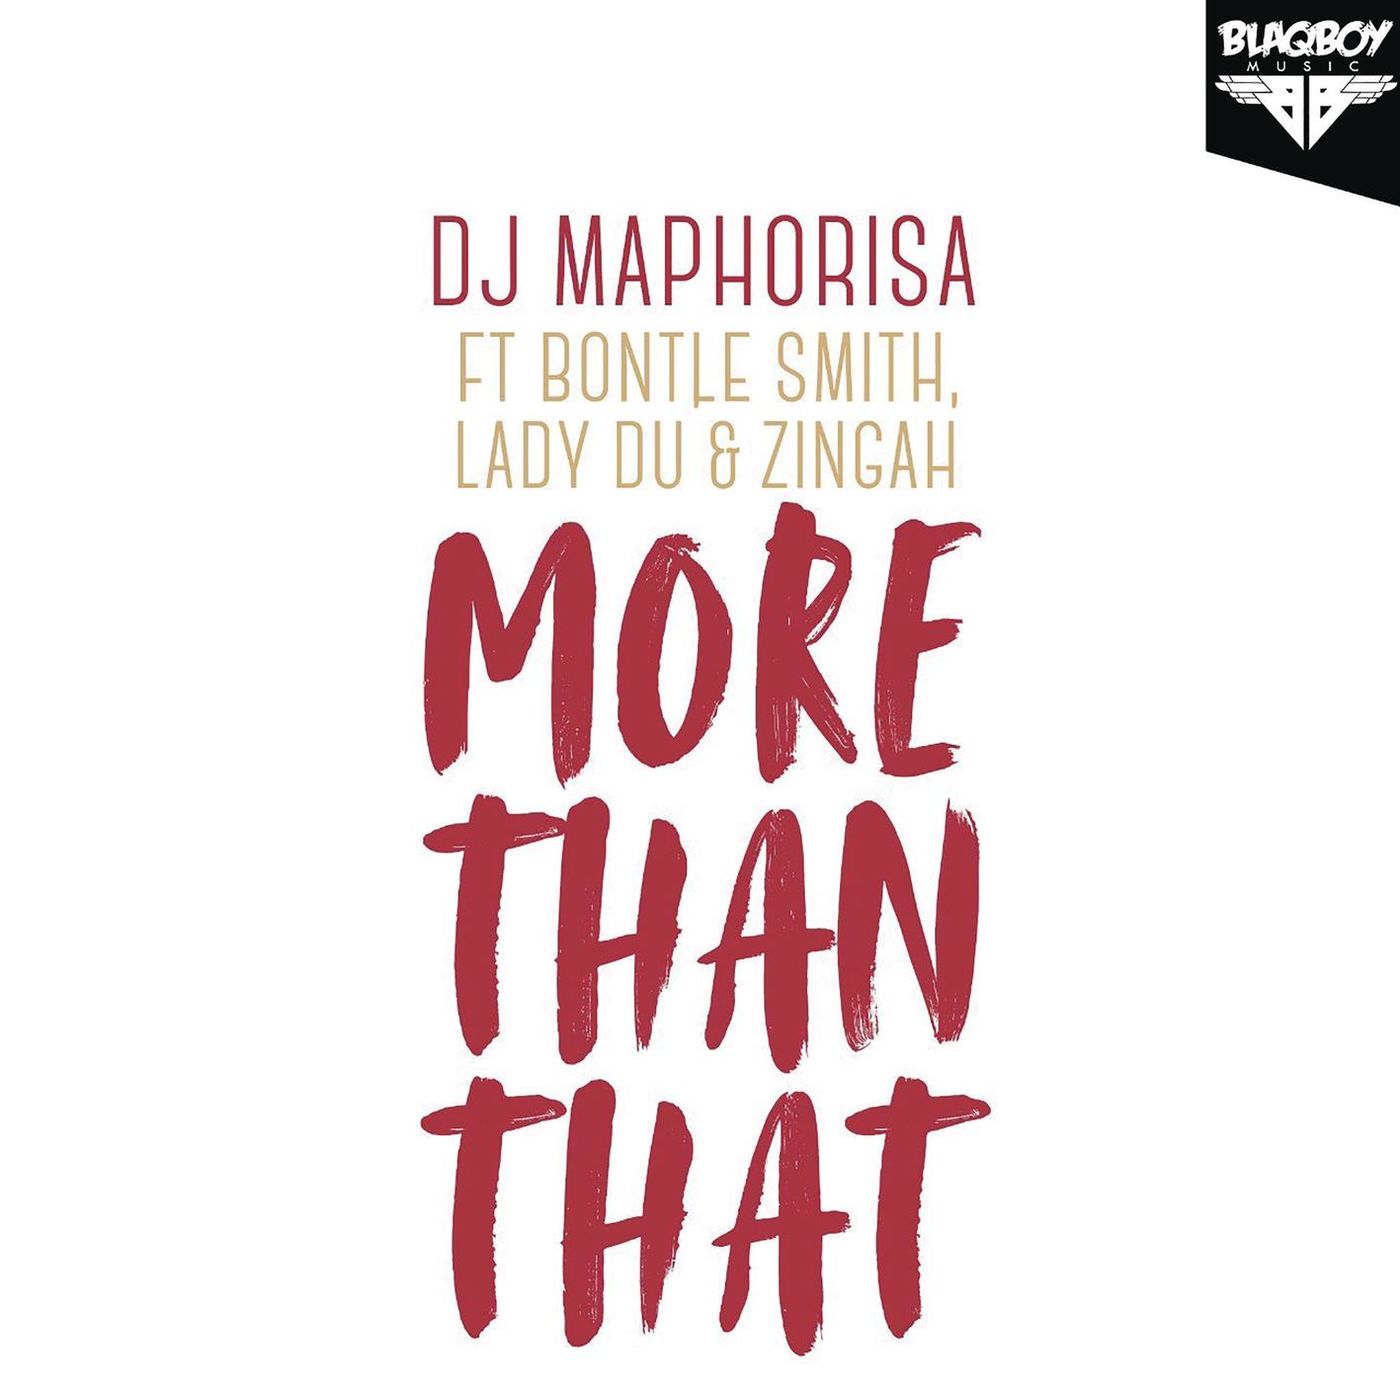 DJ Maphorisa feat. Bontle Smith, Lady Du & Zingah - More Than That / Sound African Recordings